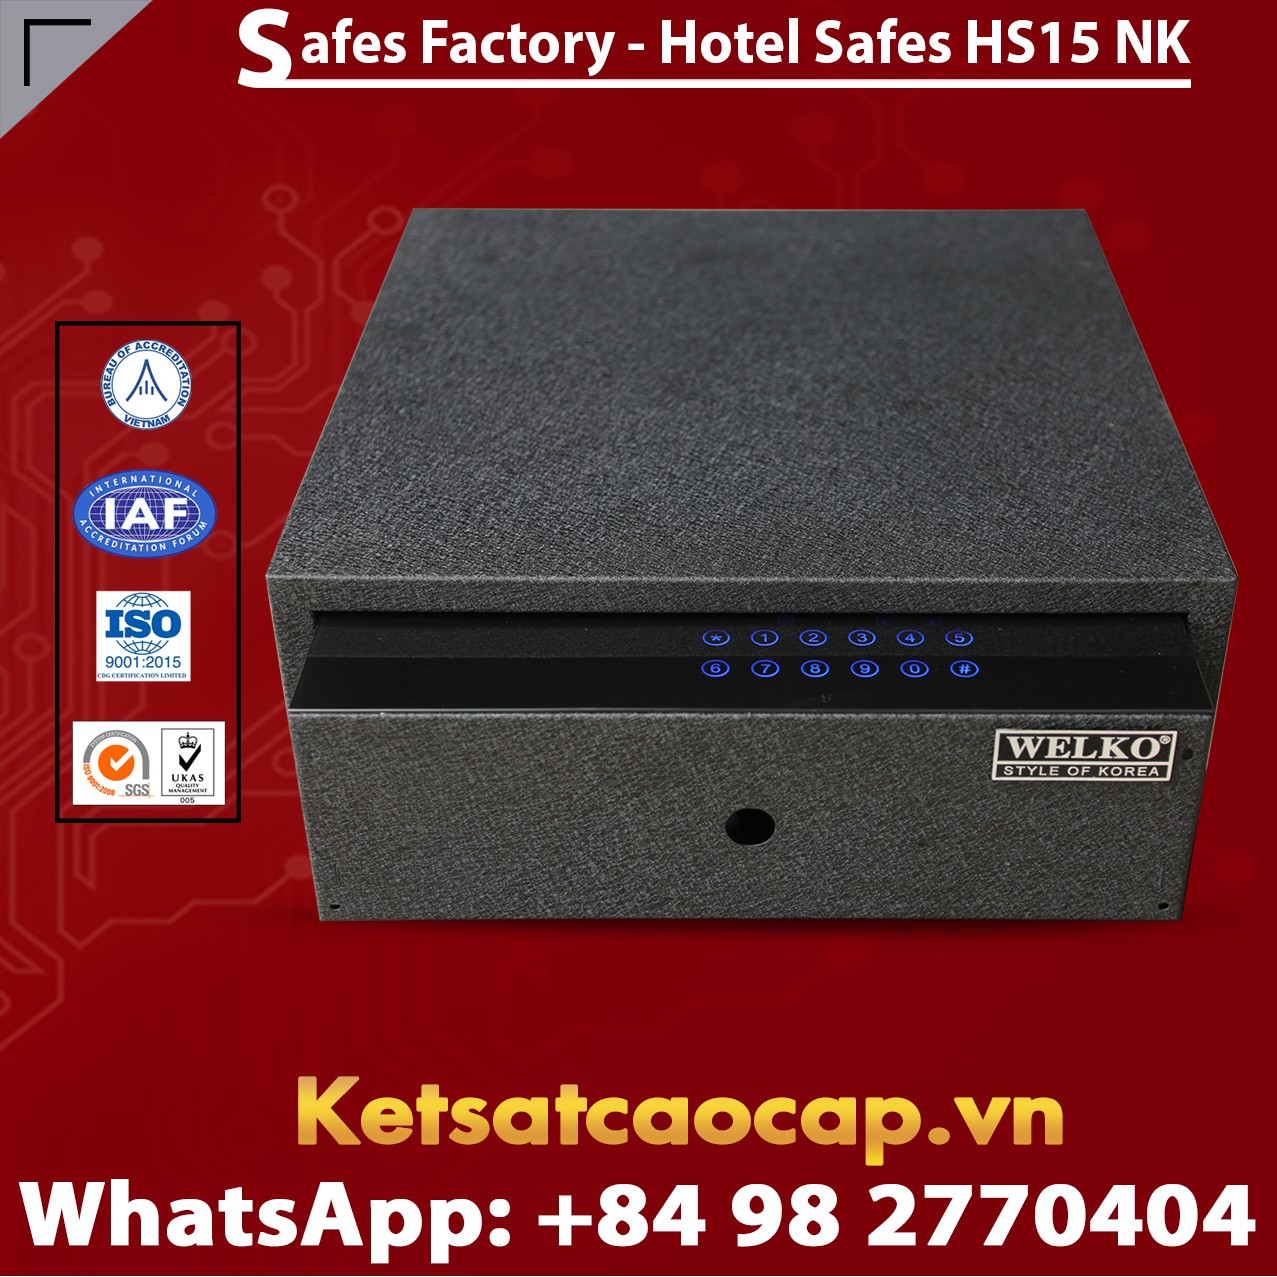 Portable Hotel Safes WELKO HS15 NK